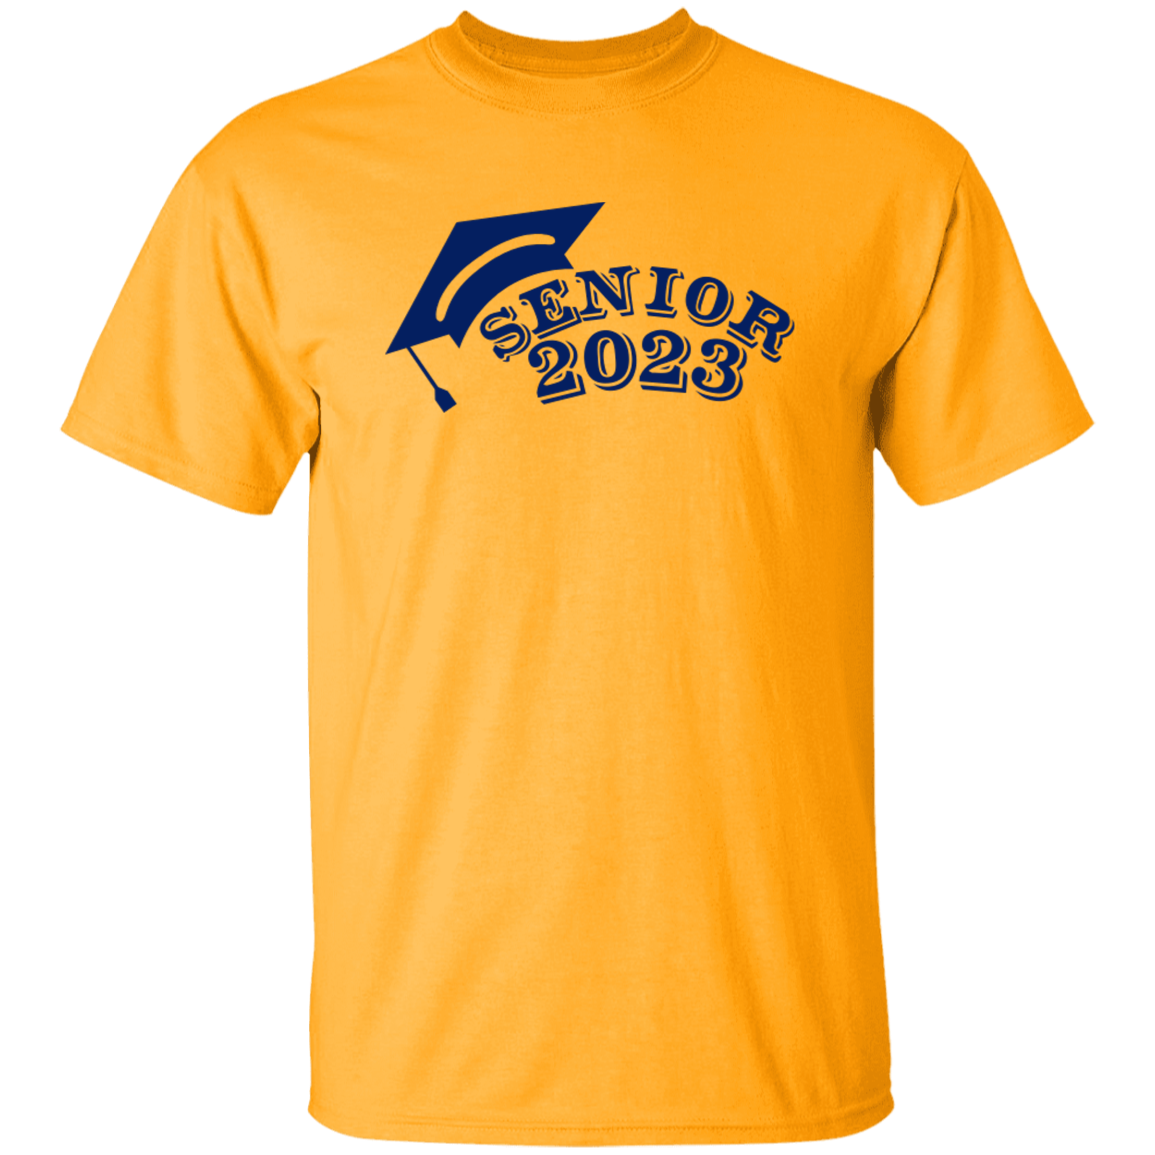 2023 Blue 5.3 oz. T-Shirt